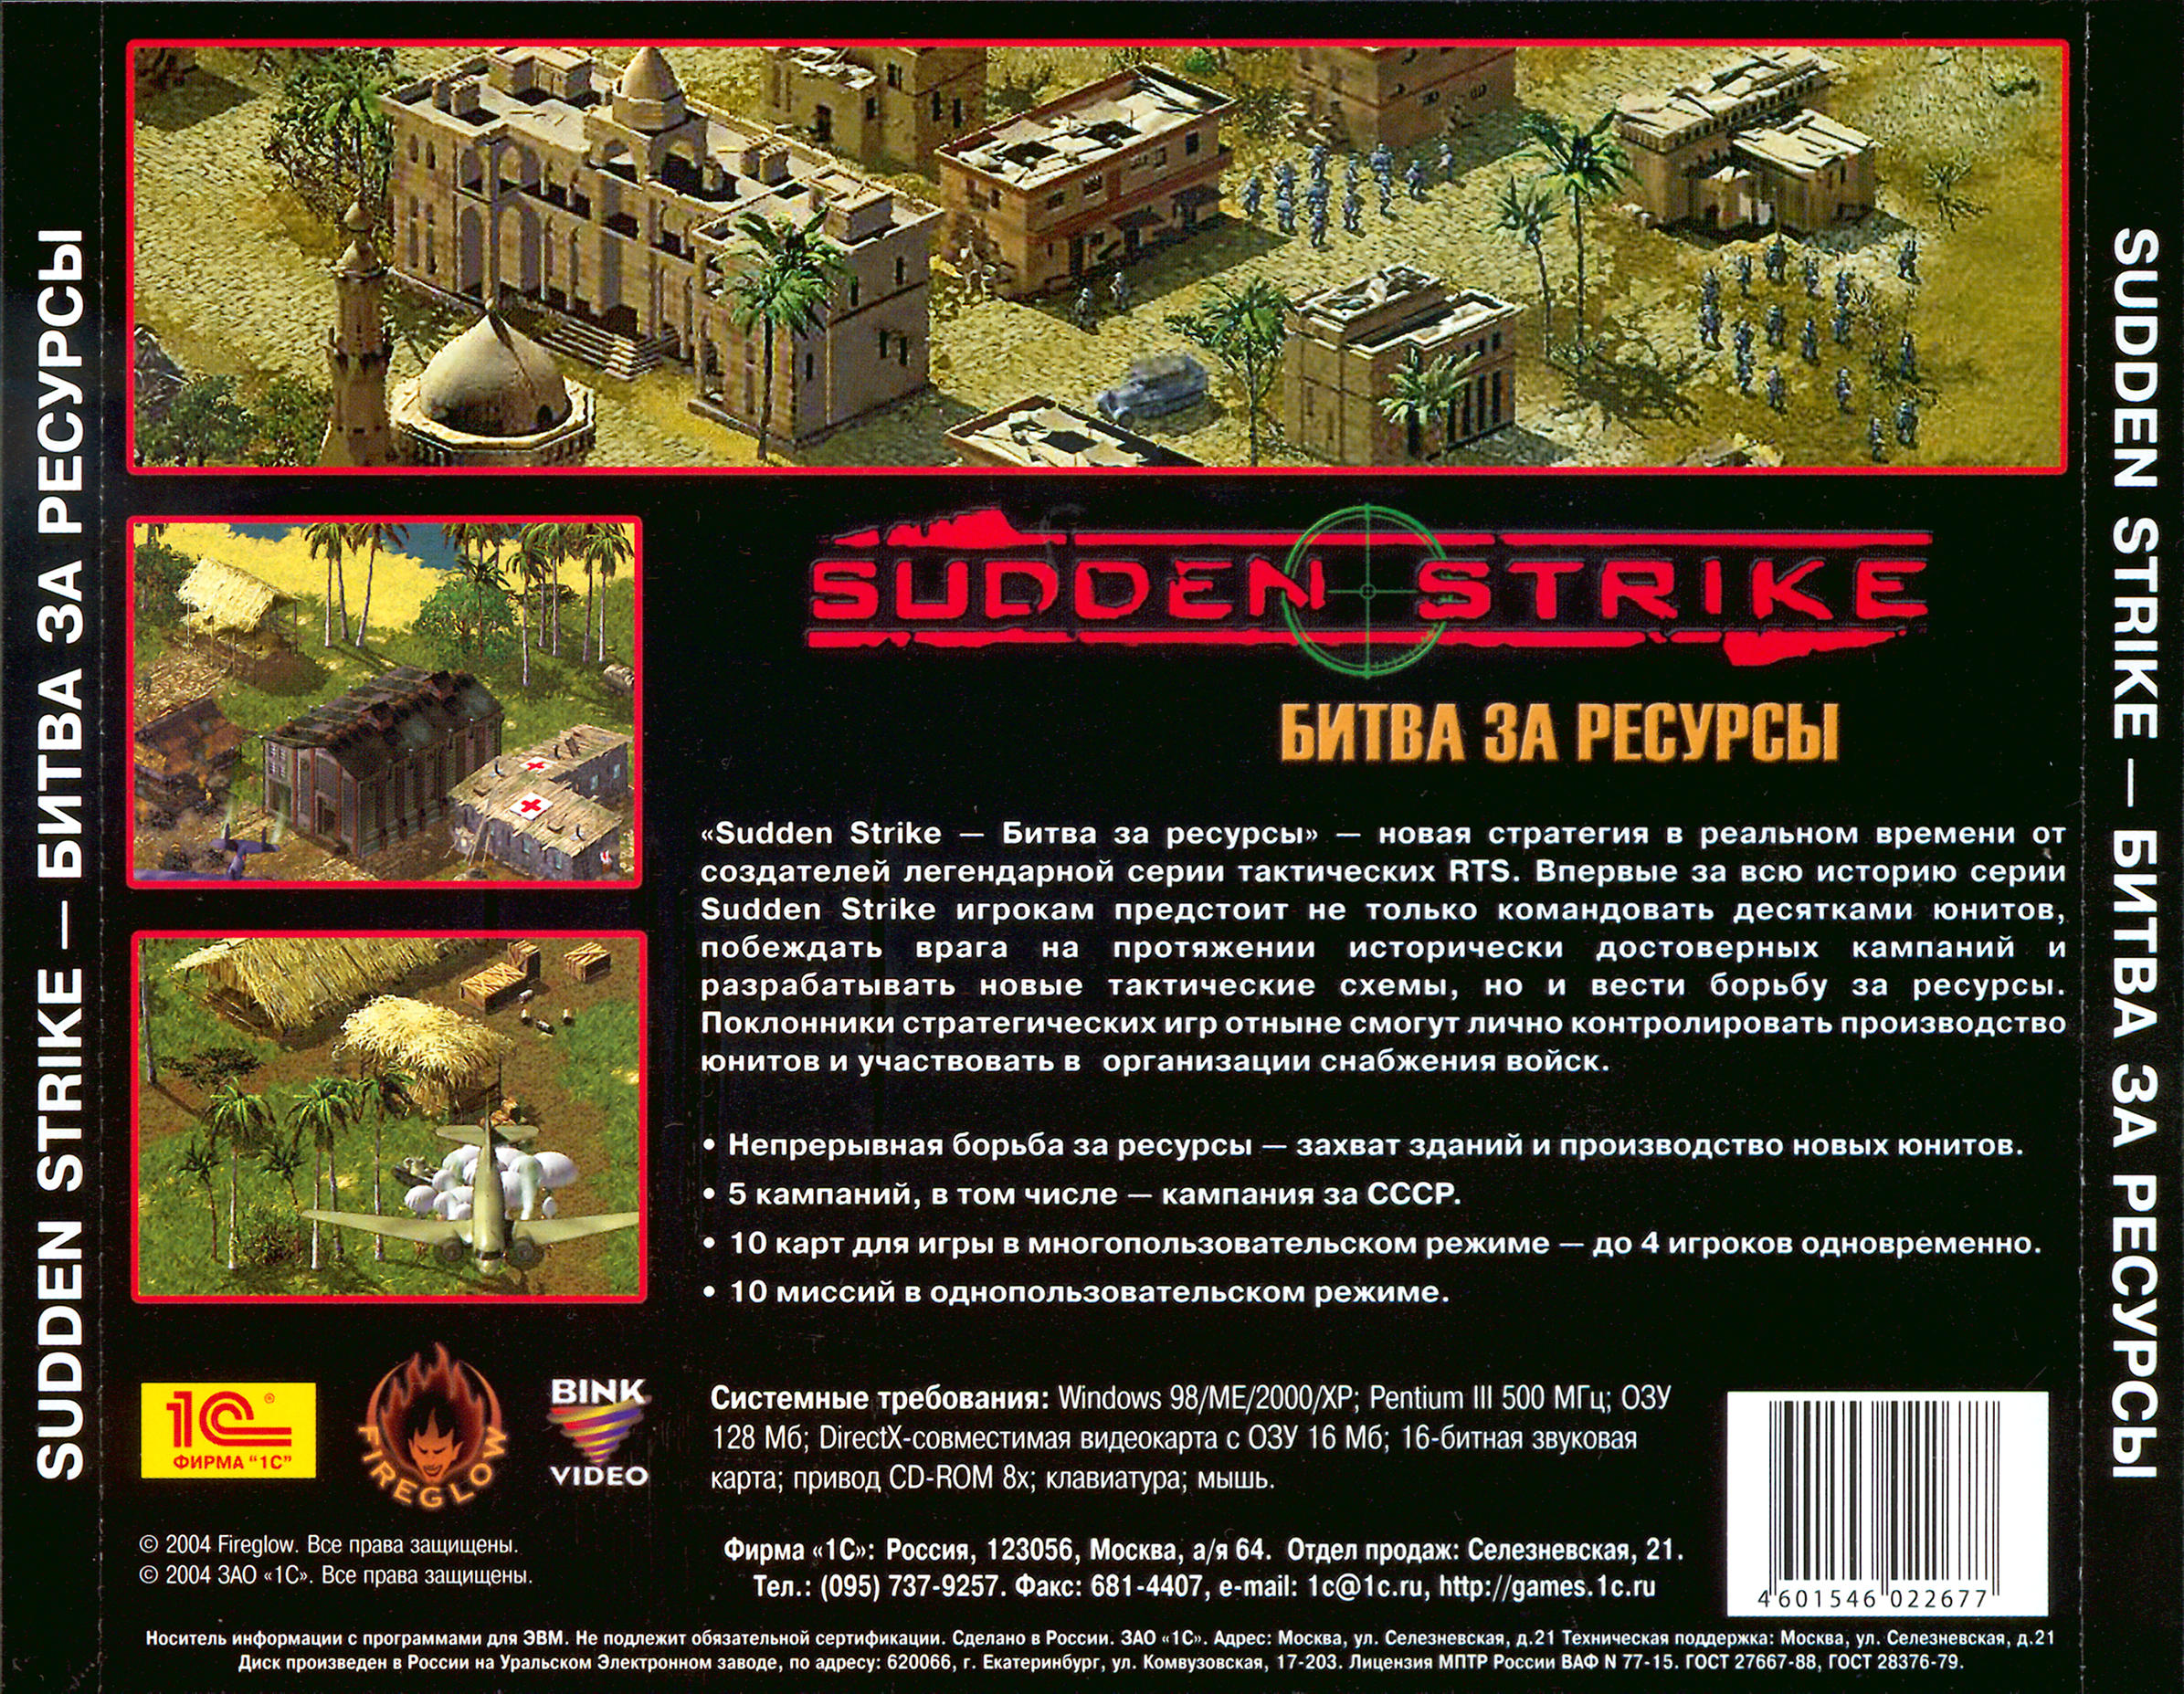 Sudden Strike: битва за ресурсы. Битва за ресурсы книга.